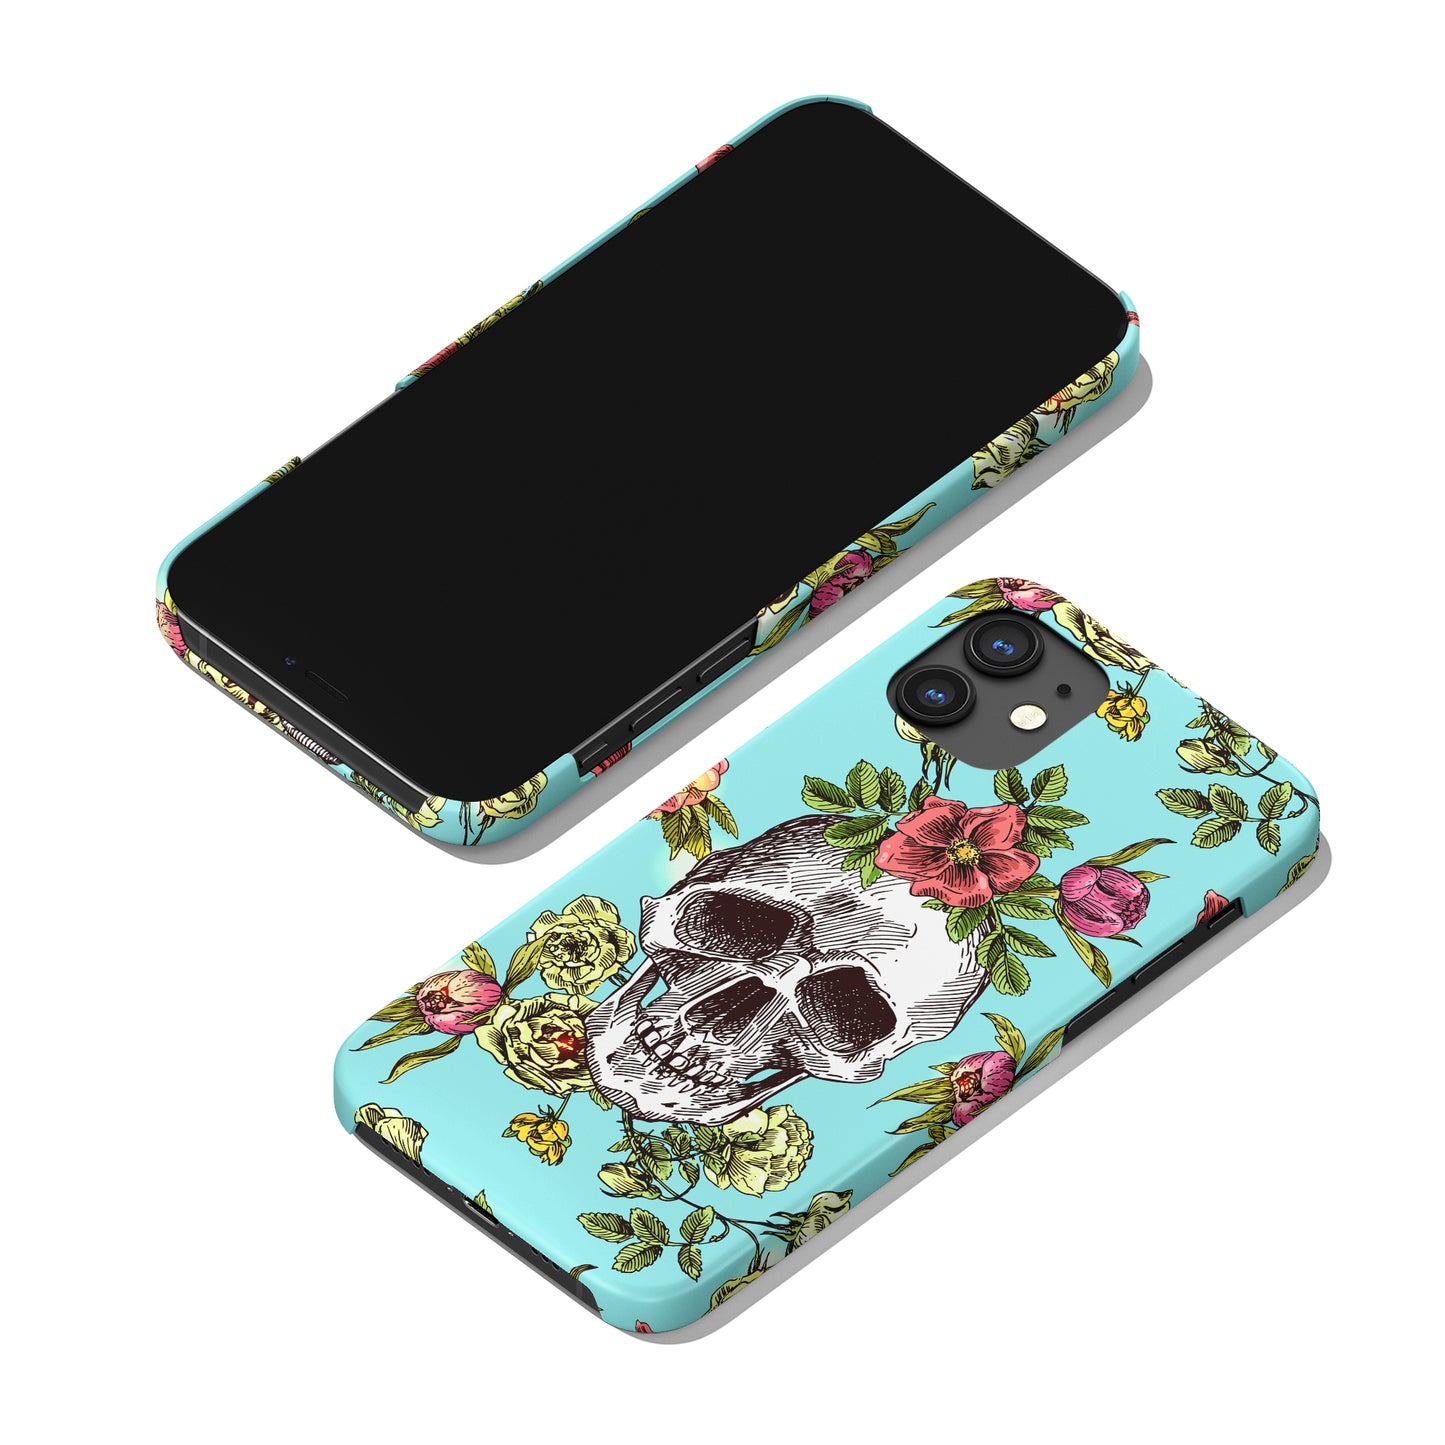 Frida Skull Psychobilly iPhone Case